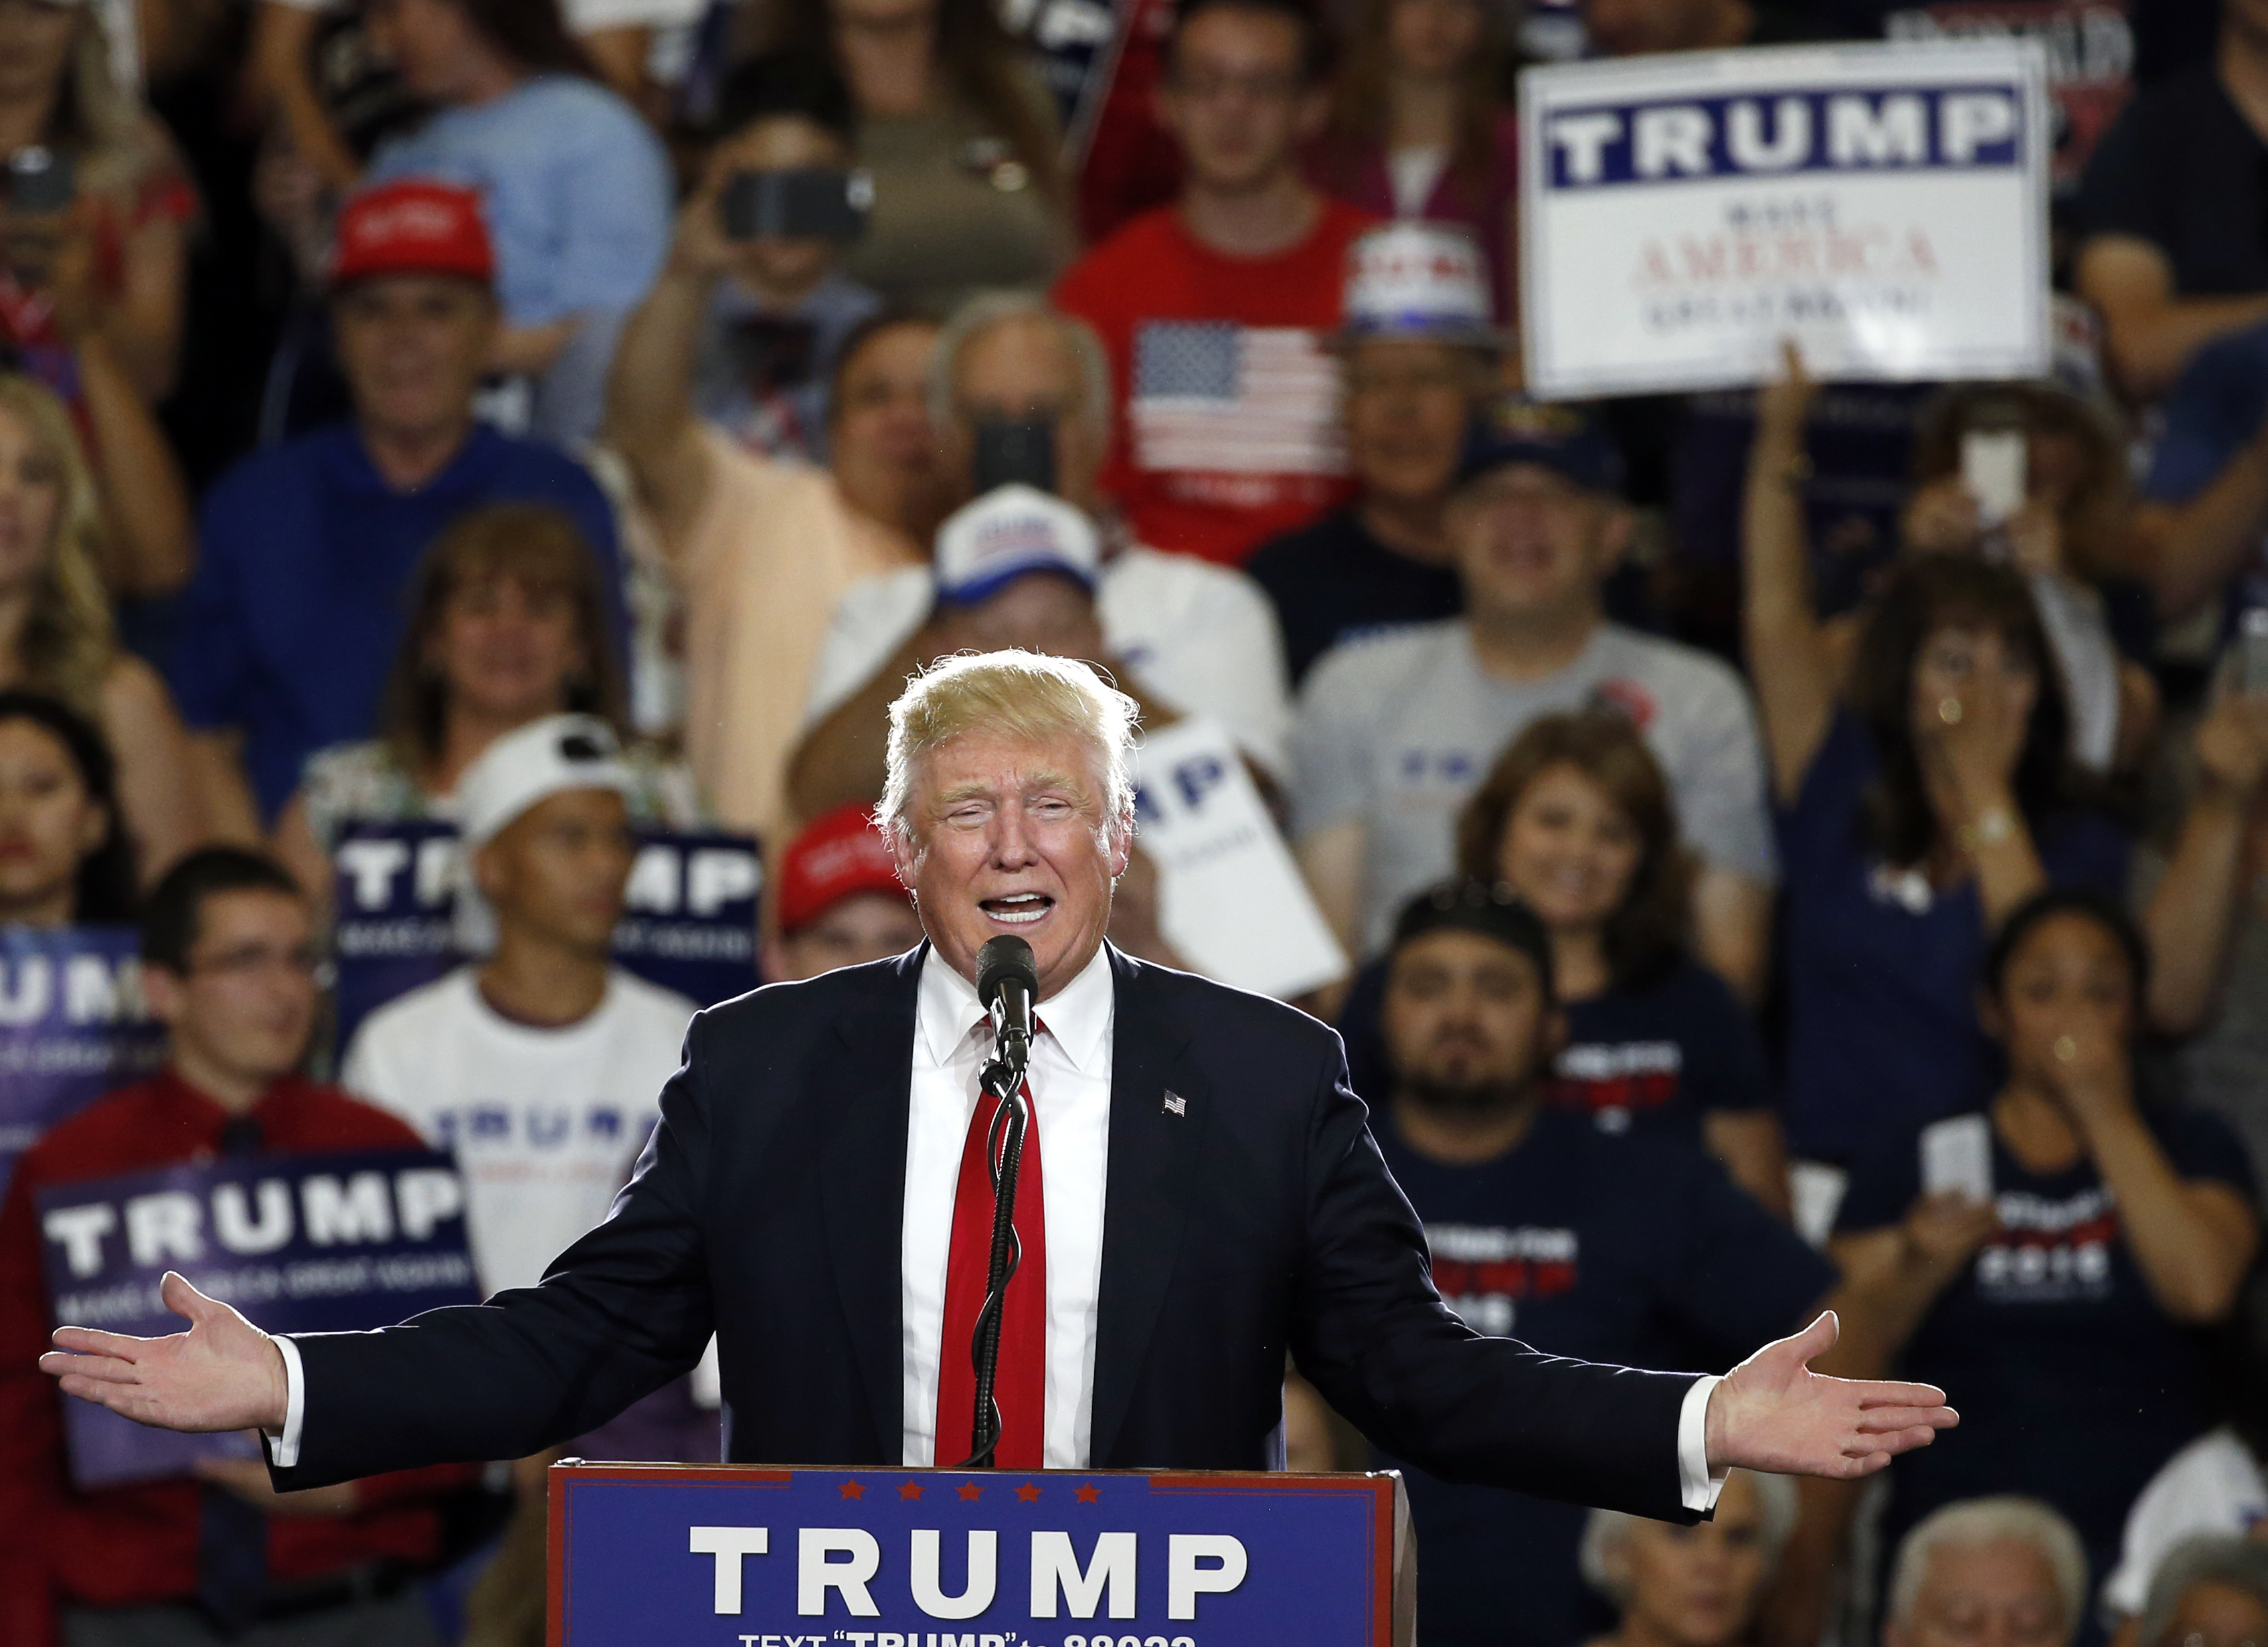 Republican presidential candidate Donald Trump speaks at a campaign event in Albuquerque